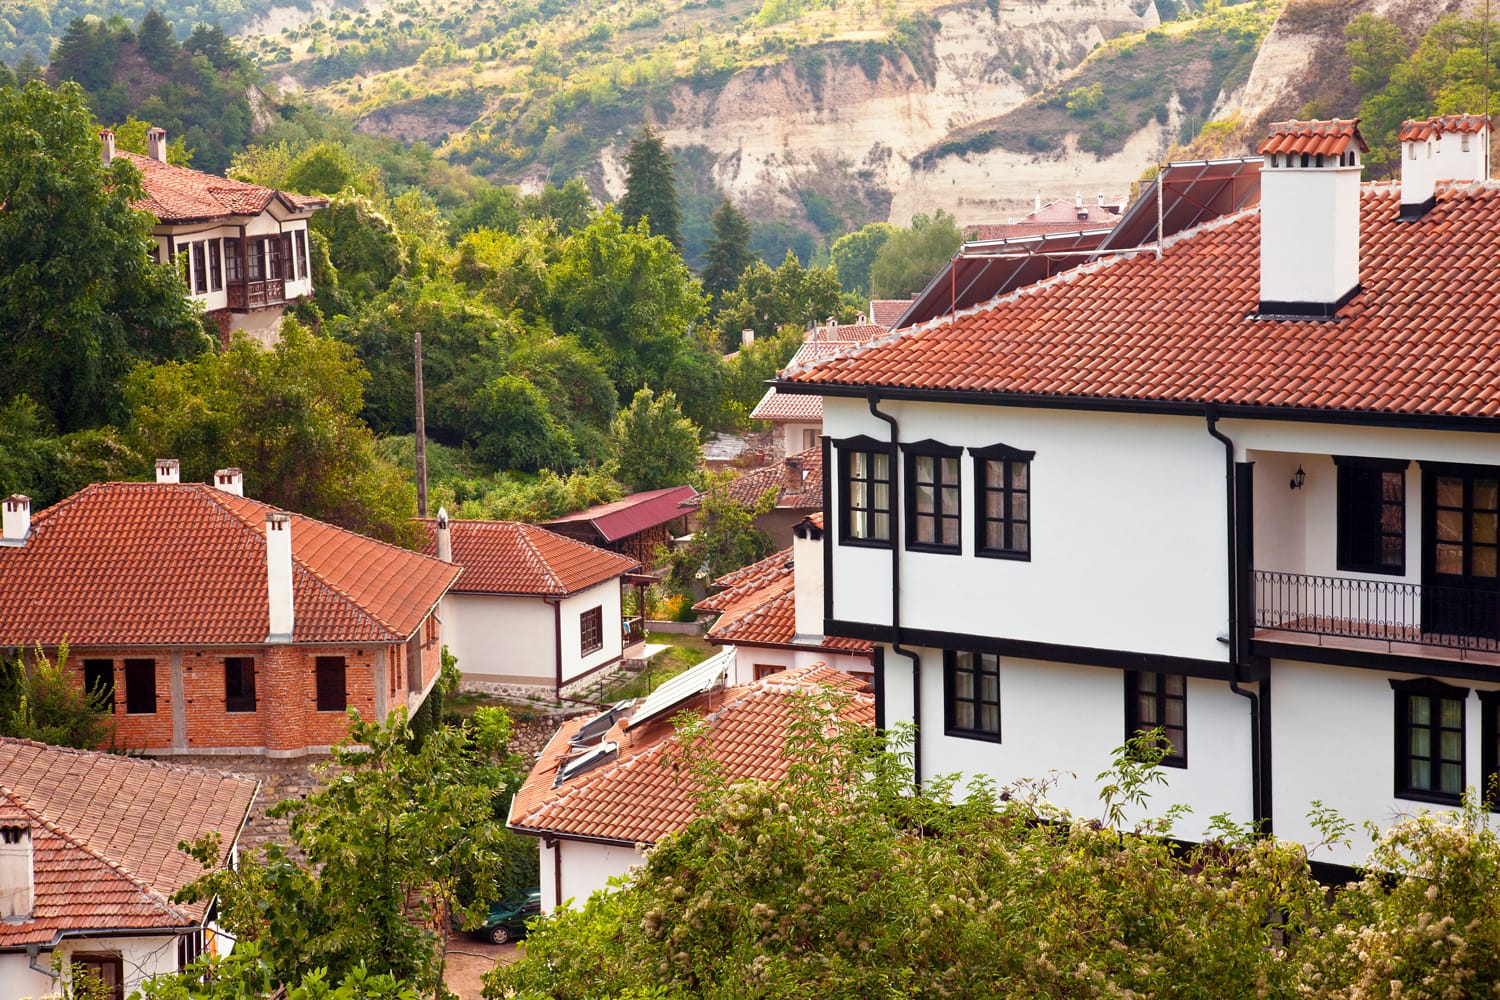 Top view of houses in historic Melnik, Bulgaria.